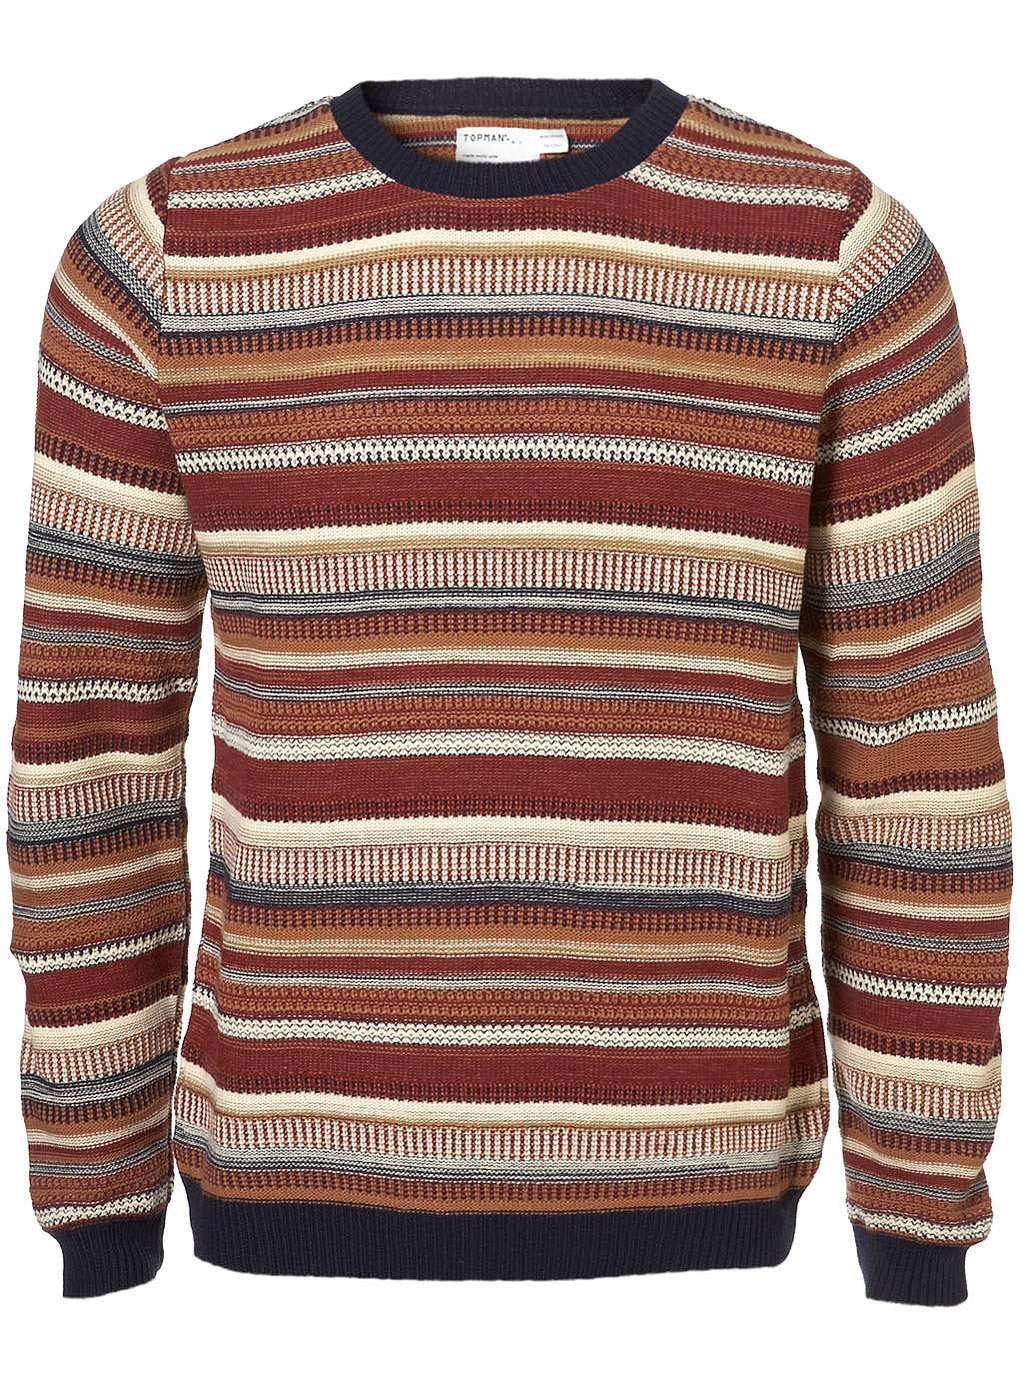 TOPMAN Multi Coloured Stripe Jumper in Brown for Men - Lyst